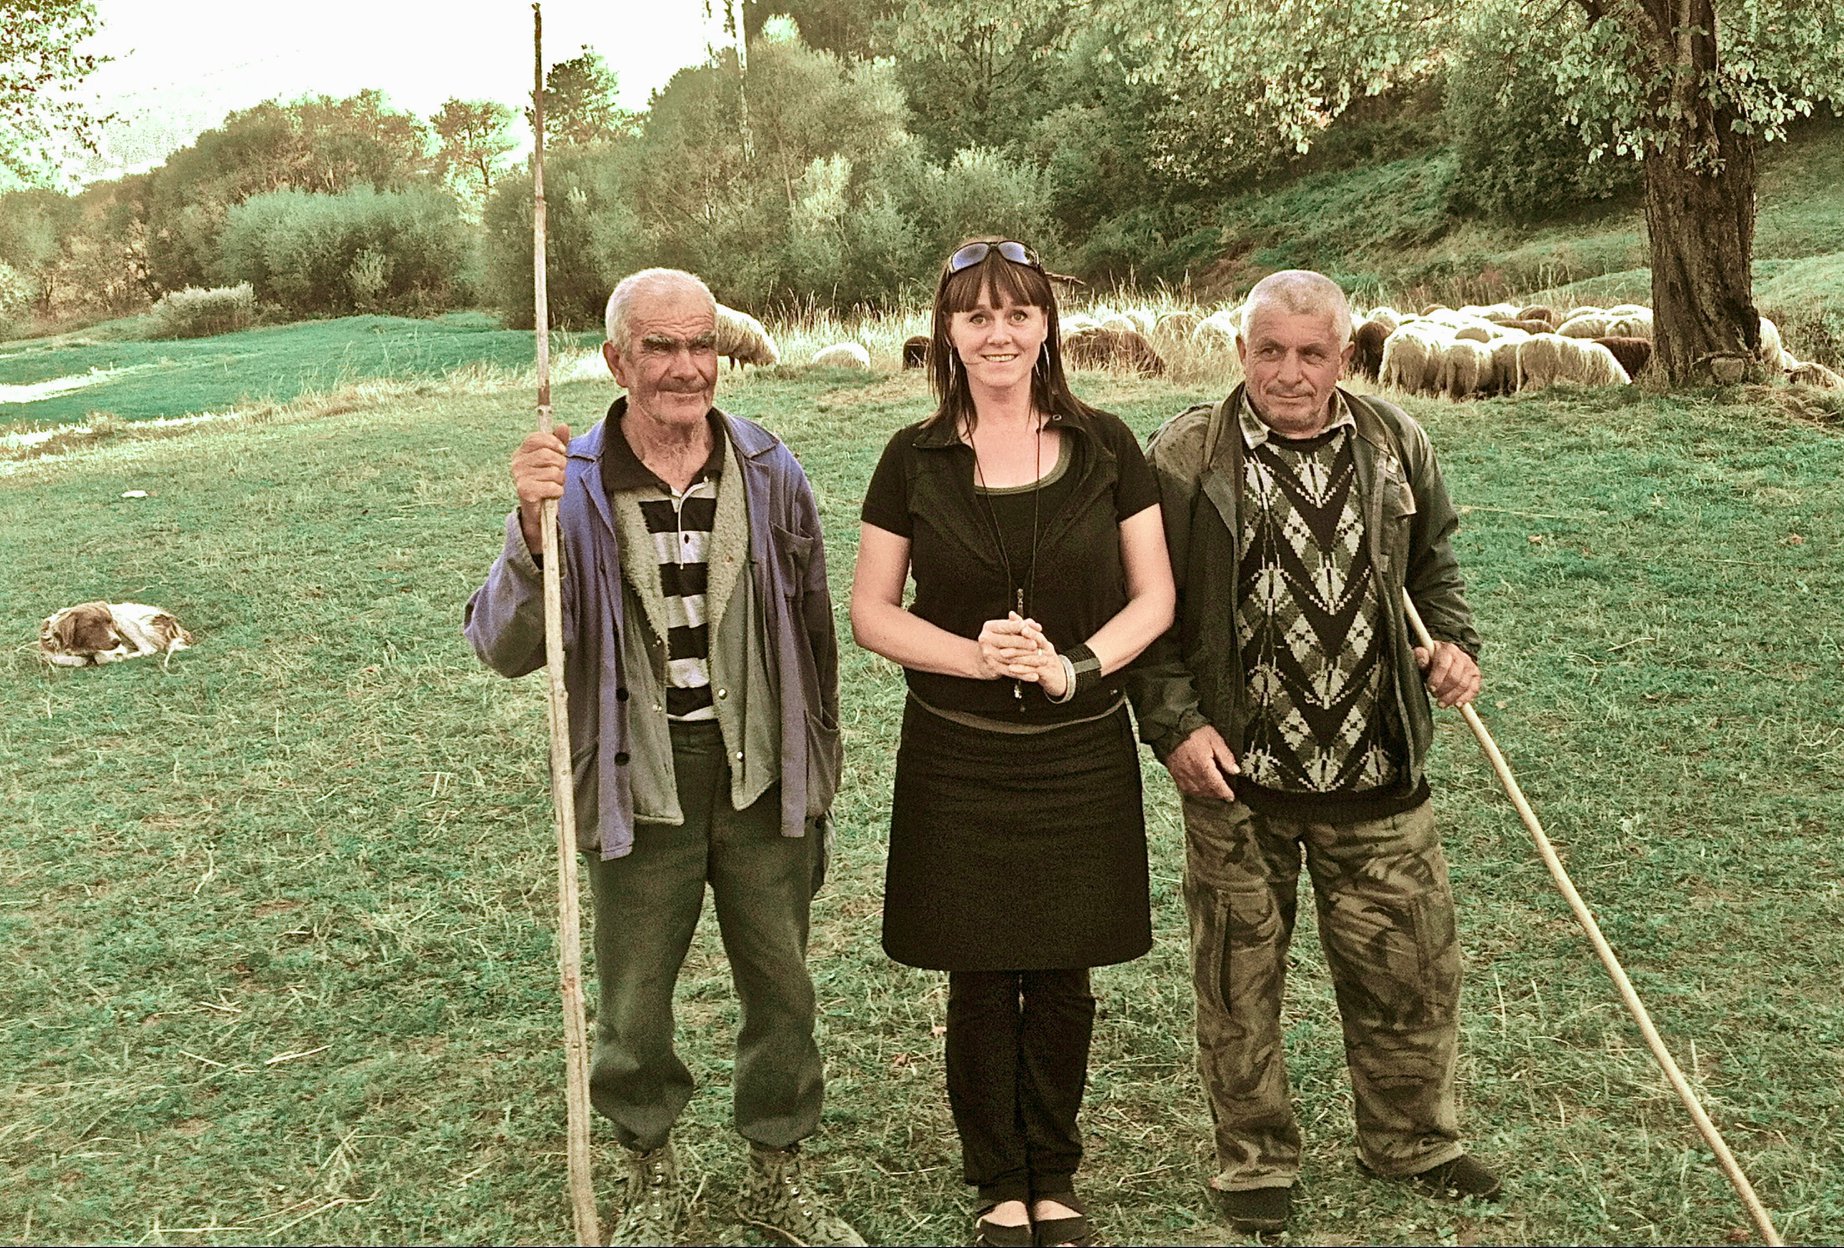 Malin Skinnar with shepherds in Bulgaria